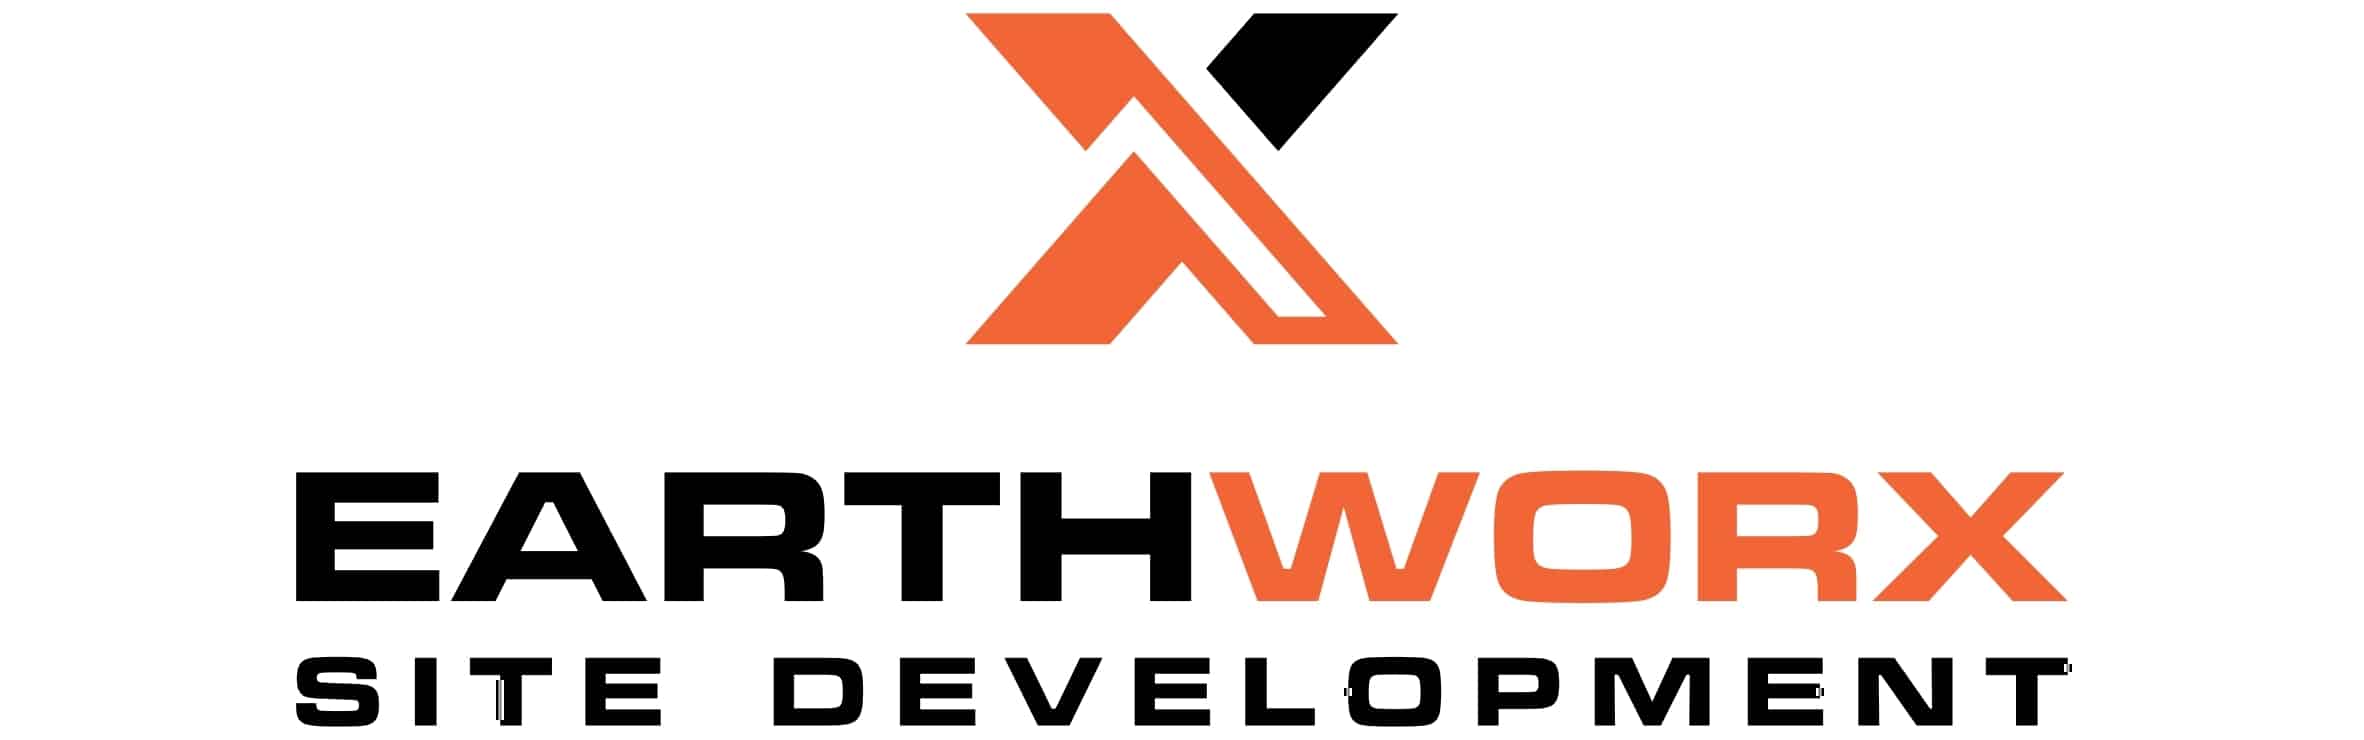 Earthworx logo crop